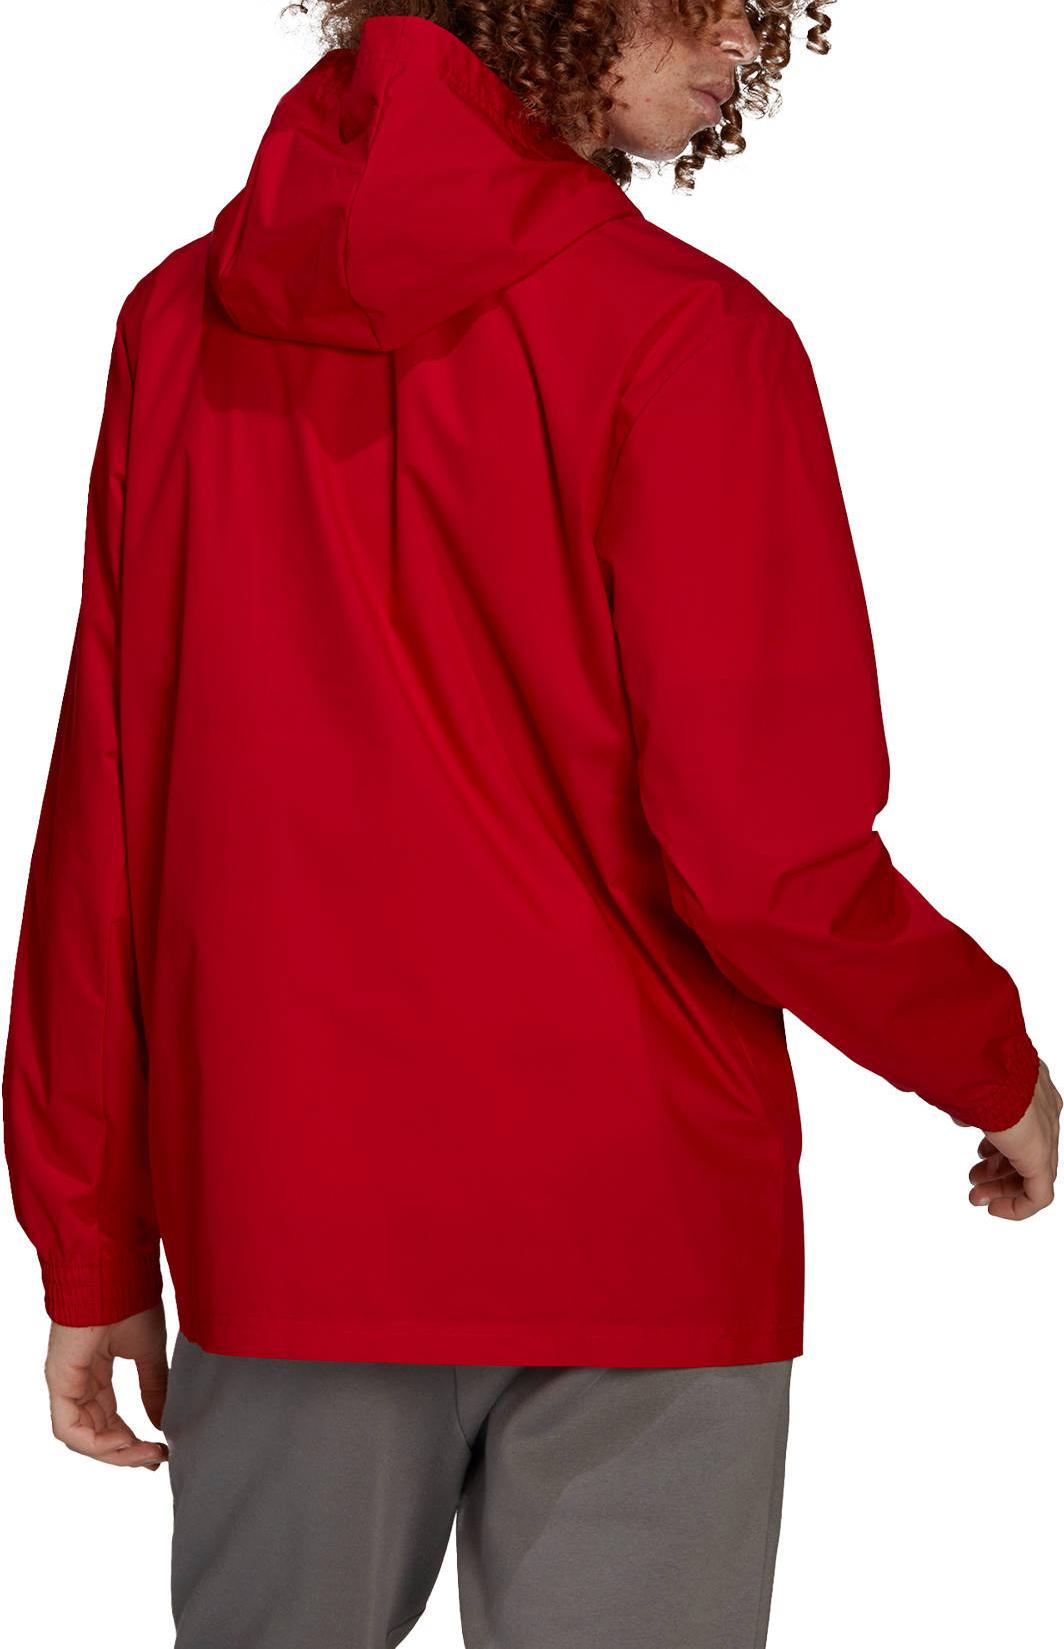 AW Hooded JKT jacket adidas ENT22